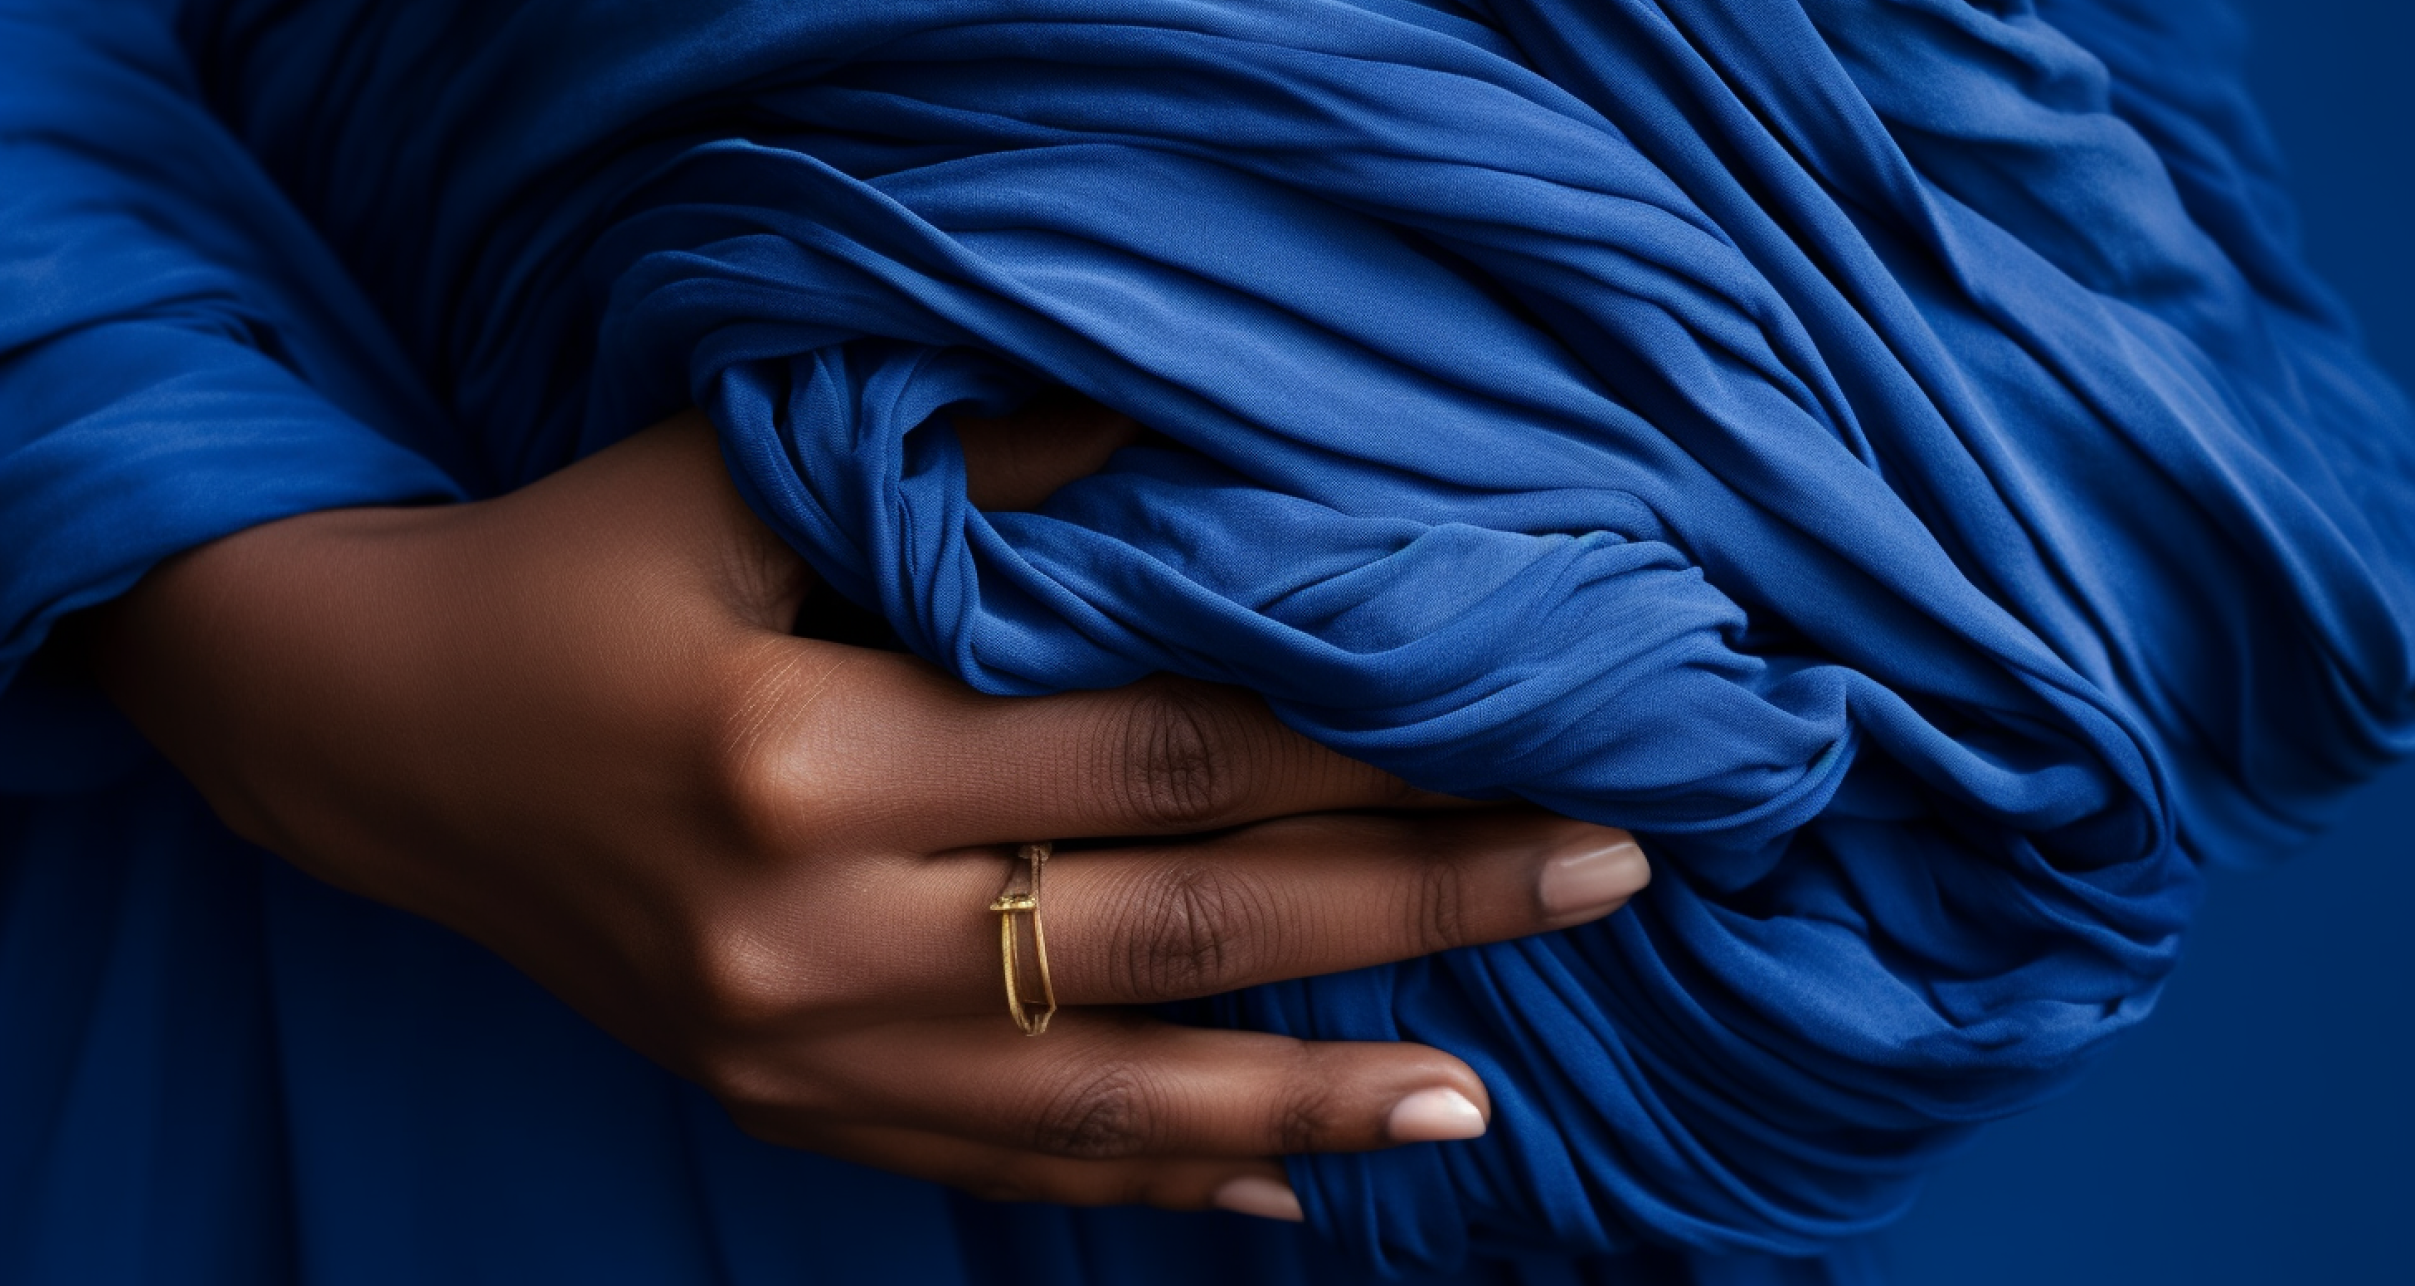 hand-on-royal-blue-fabric